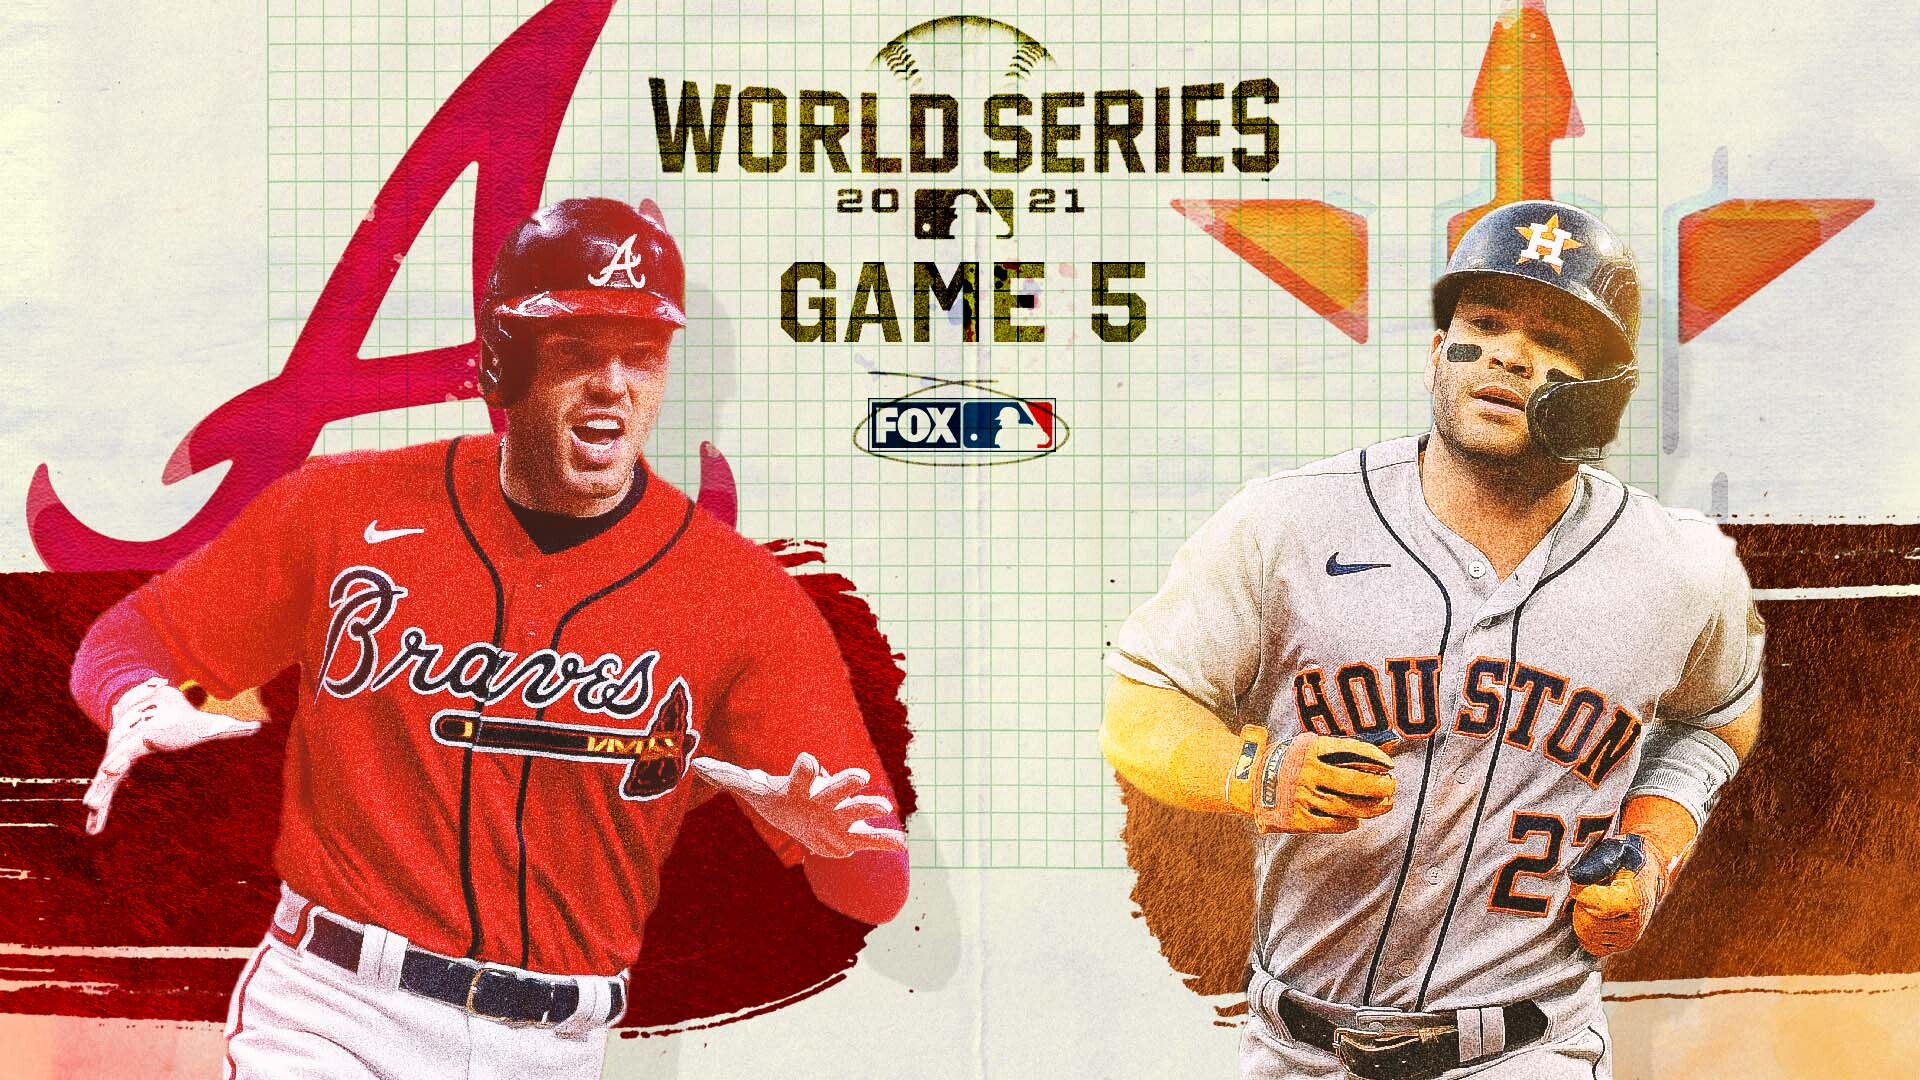 2017 World Series Game 5 GameThread: Houston Astros vs. Los